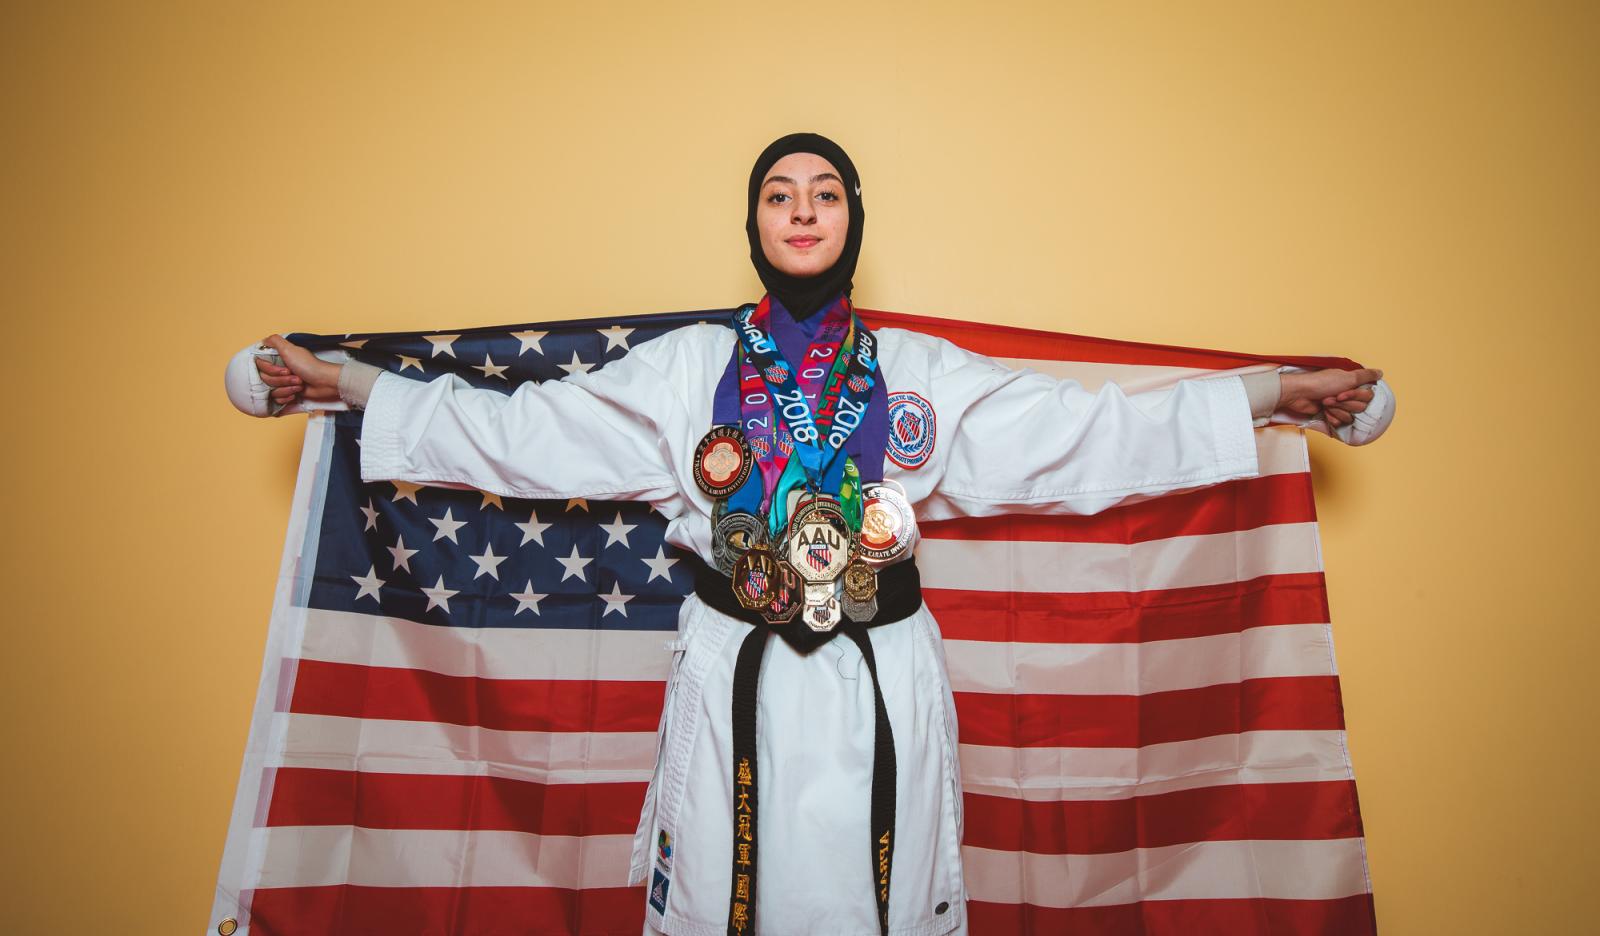 PORTRAITS - Aprar Hassan is a 19-year-old, Muslim-American Karate...